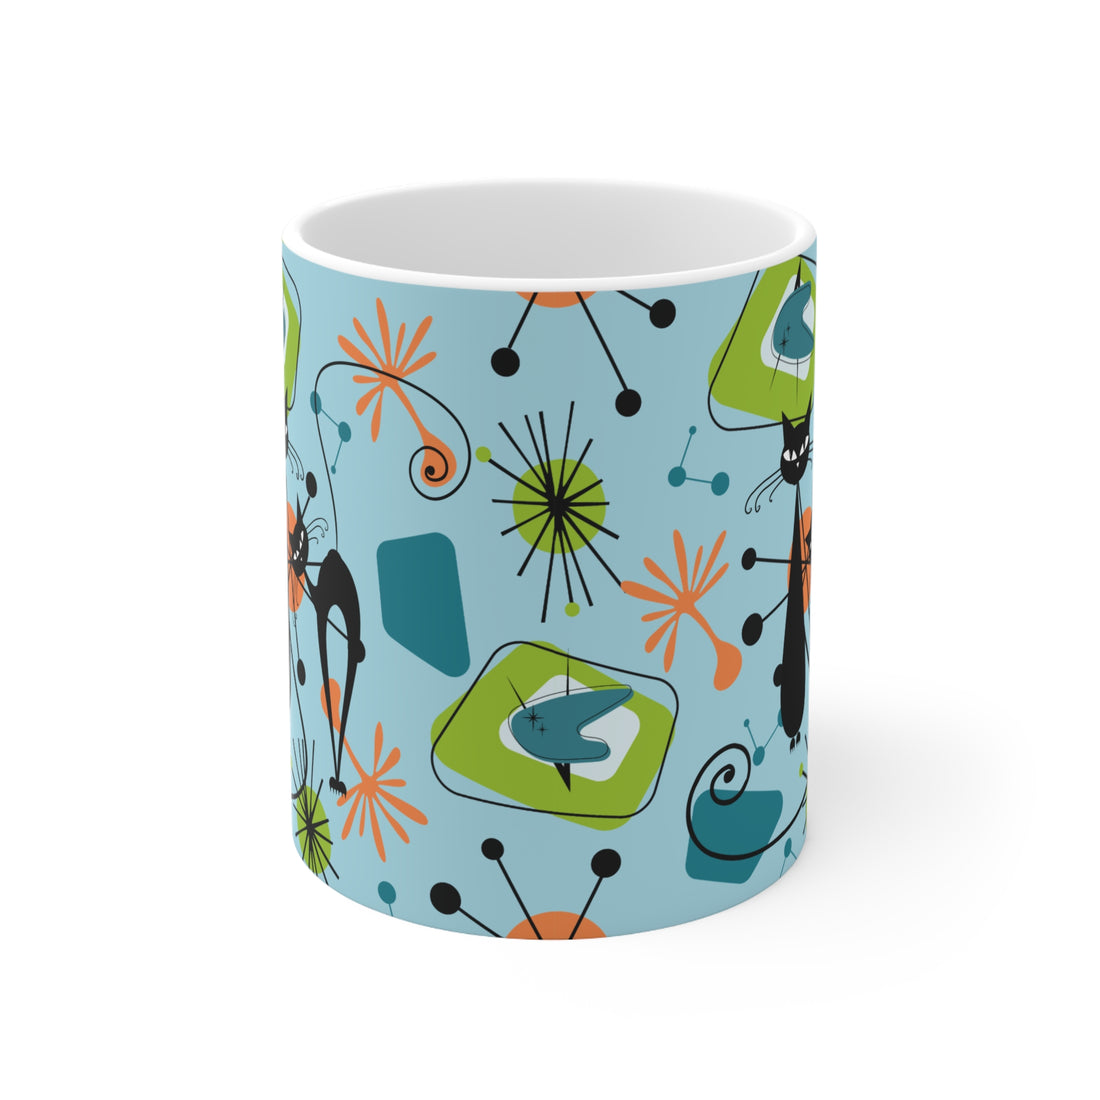 Atomic Cat Coffee Mug, Kitschy 50s Mid Century Modern Coffee, Tea, Blue, Green, Sputnik Starbursts Designs Ceramic Mug 11oz